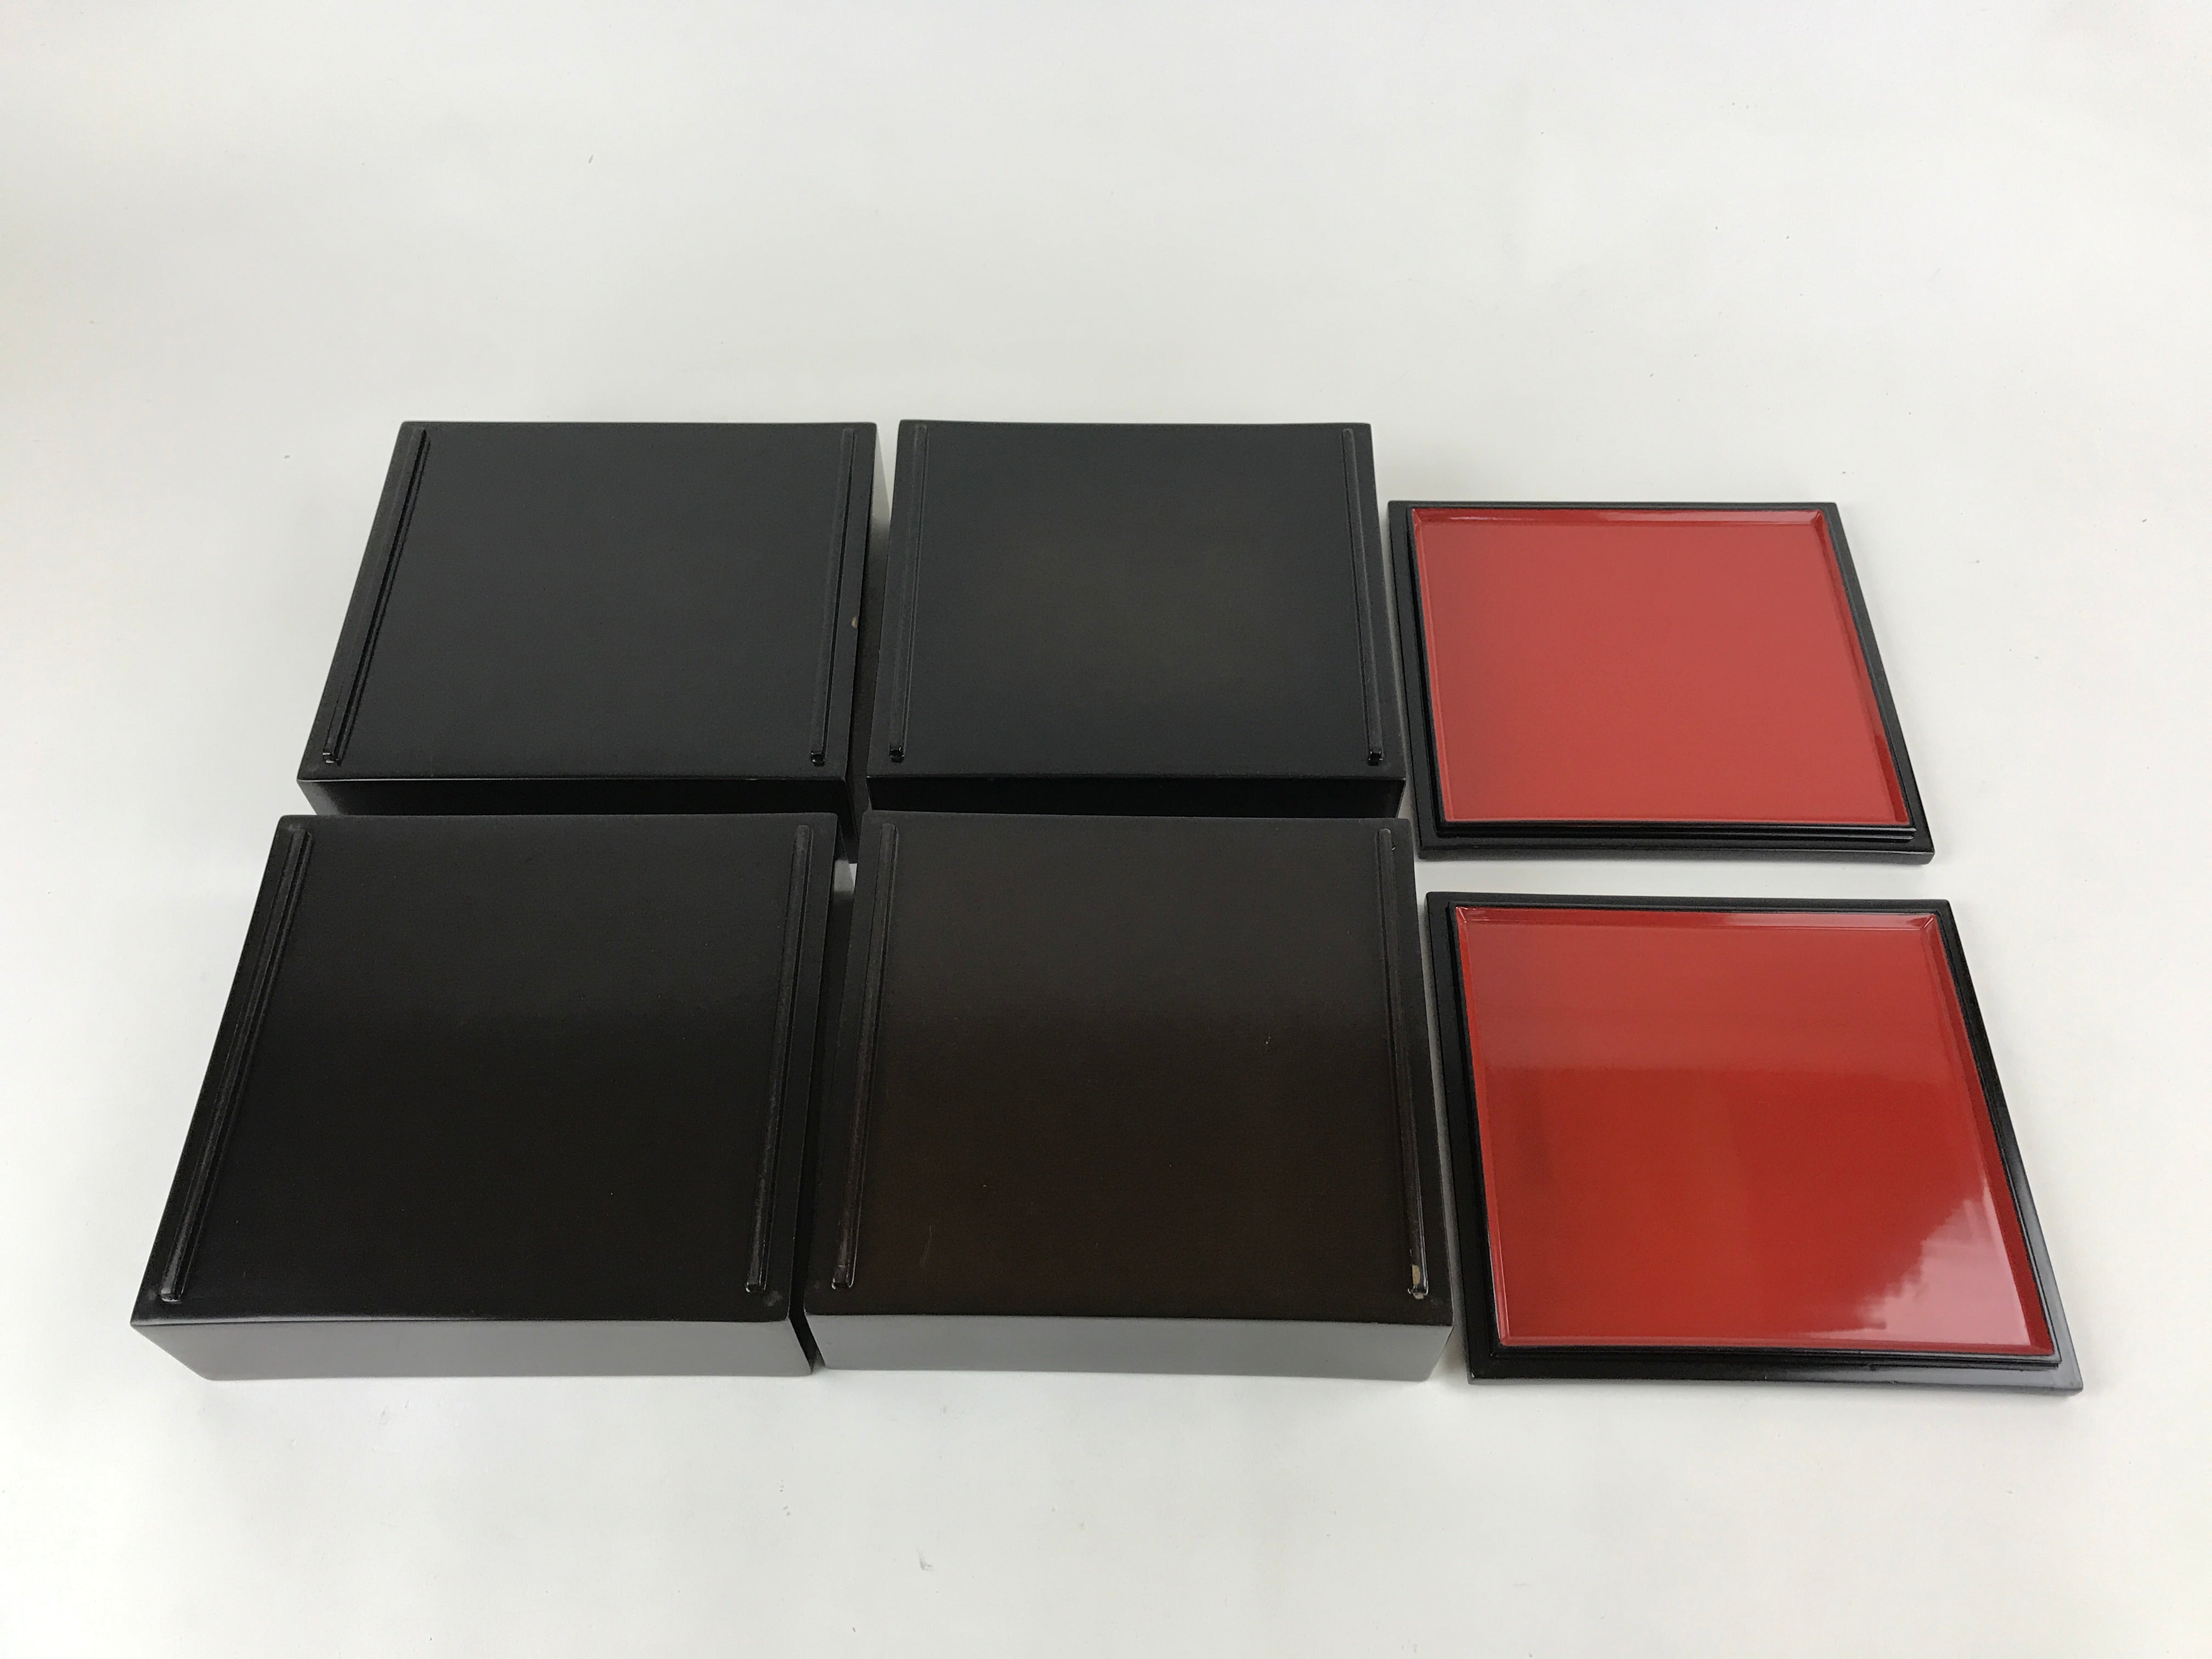 Japanese Lacquerware Bento Boxes 4 Tiers 2 Lids Vtg Wood Storage Box LWB60